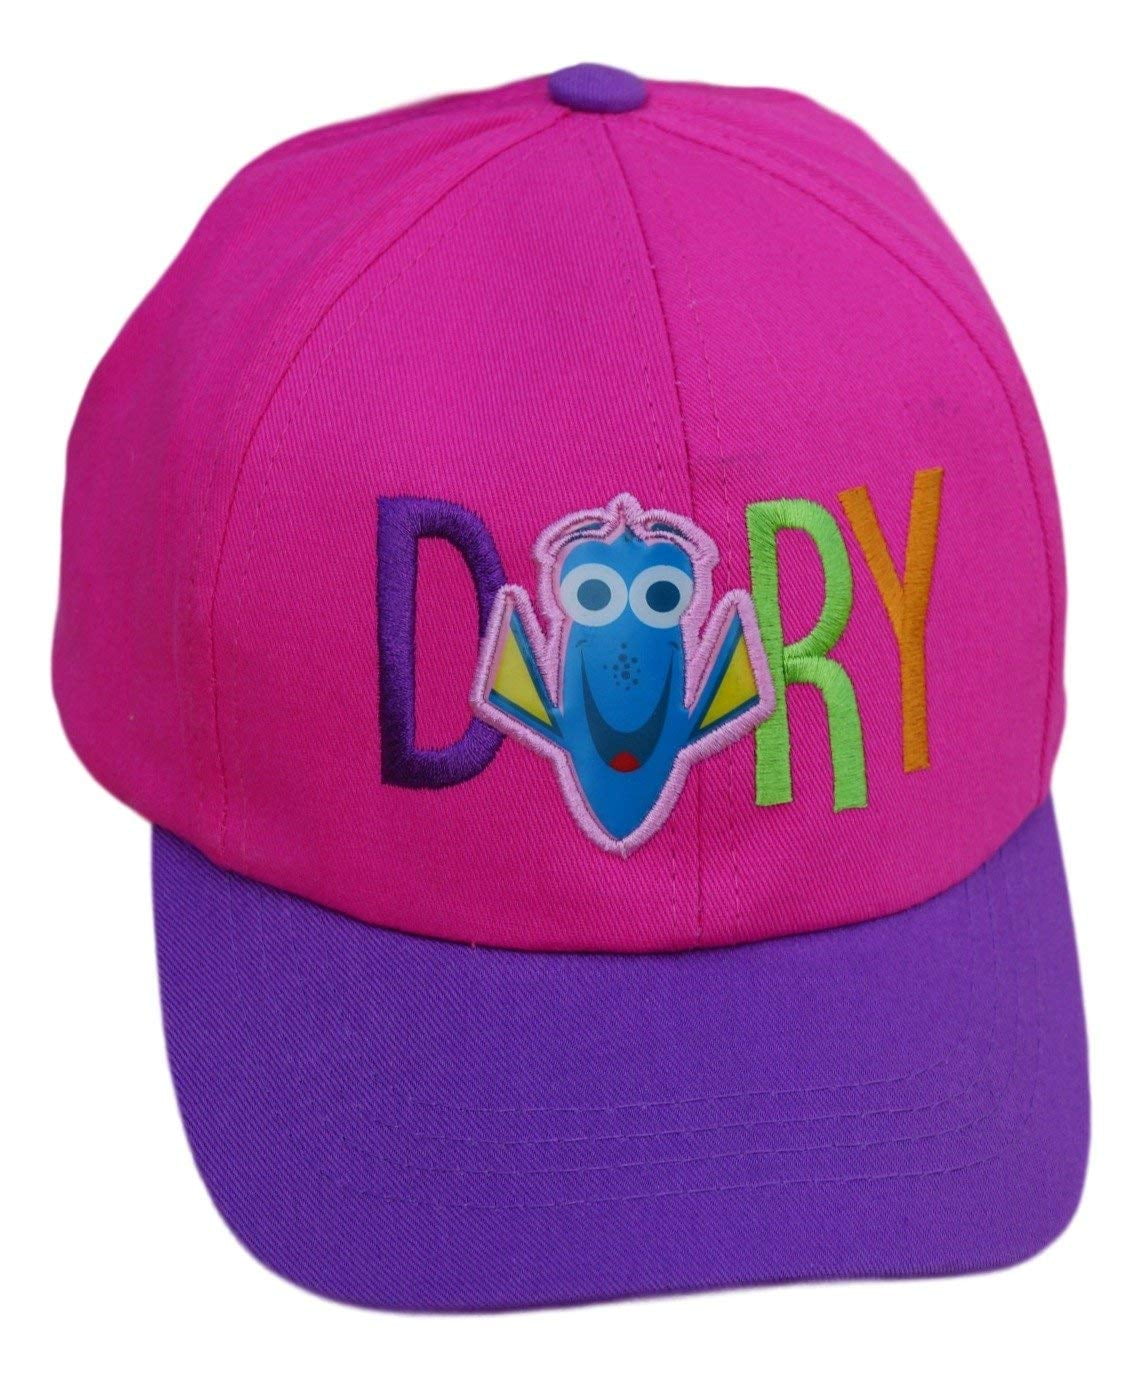 FINDING DORY Kids BASEBALL CAP Hat Holiday Travel Girls Boys Sun Hats Caps Gift 